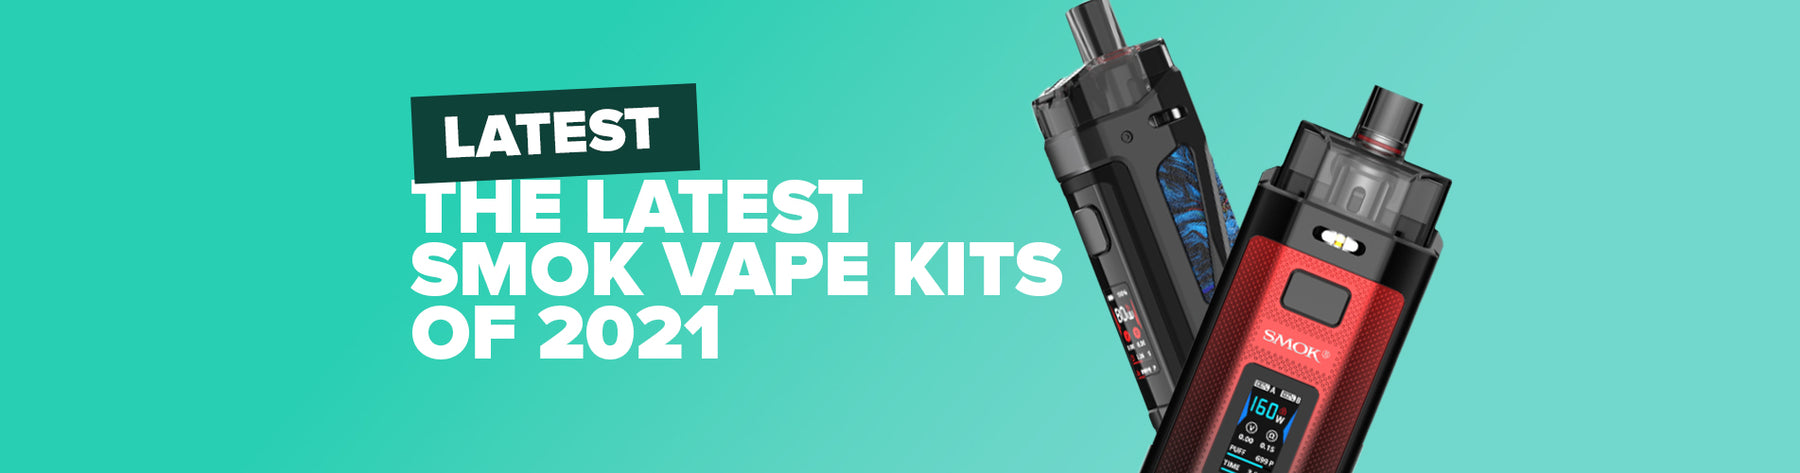 Latest SMOK Vape Kits 2021